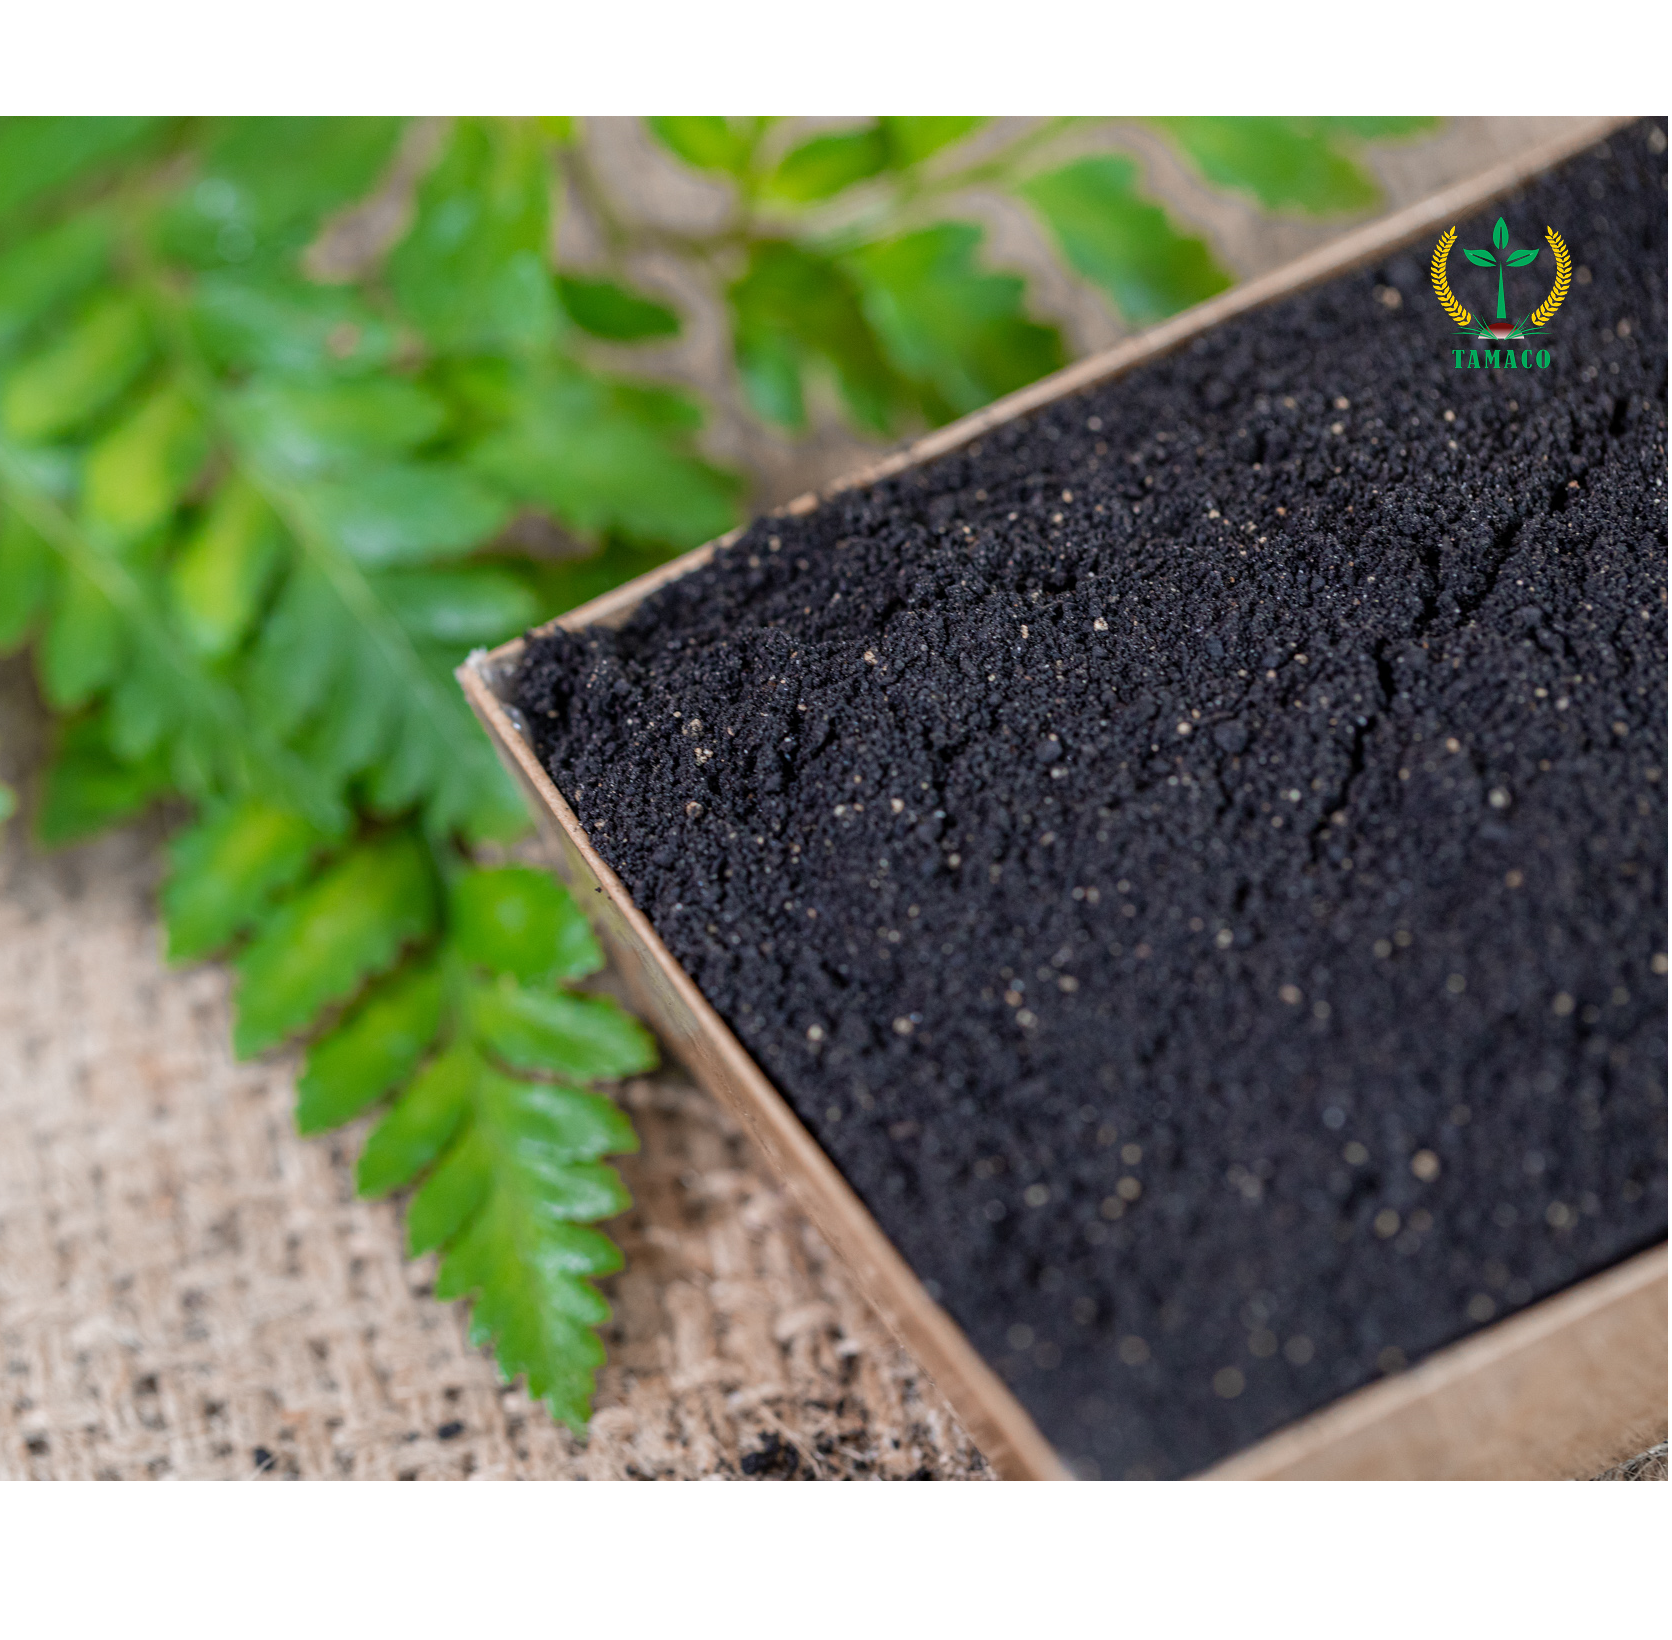 High Quality Bio Organic Fertilizer From Vietnam (Powder)